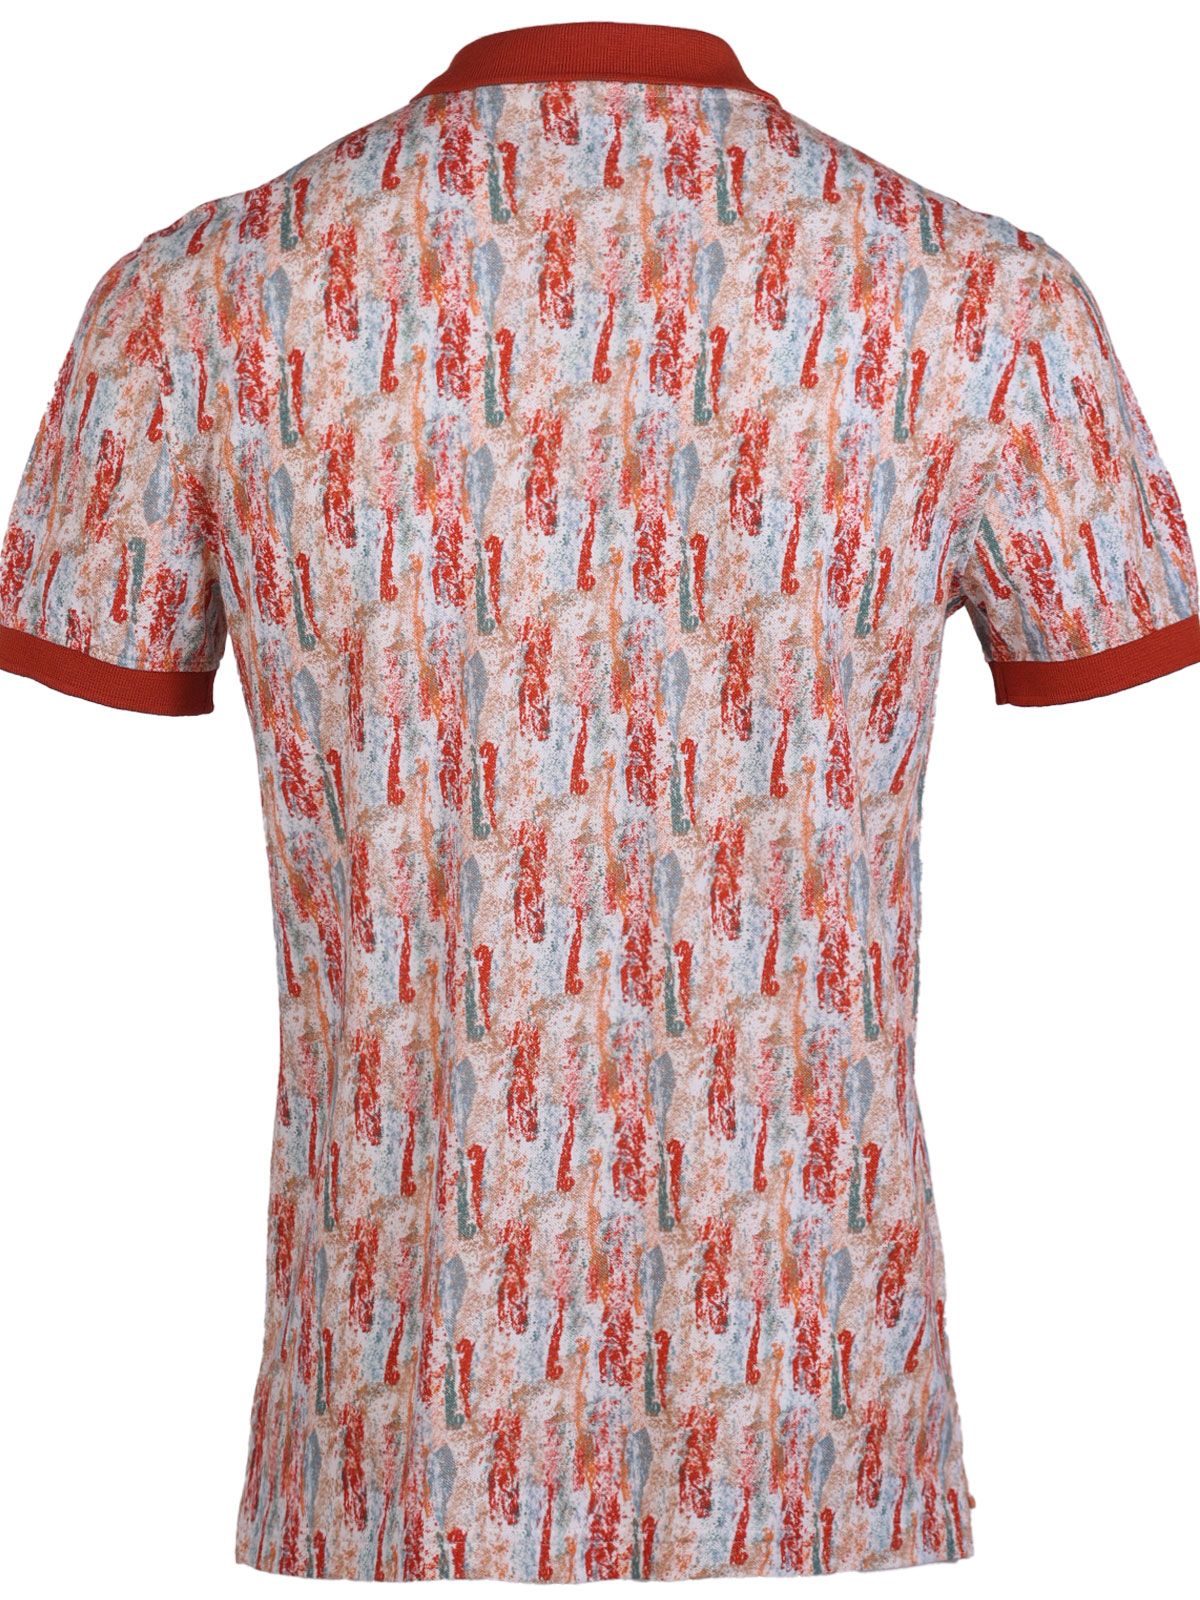 Tshirt with brick collar and print - 93445 € 42.74 img2